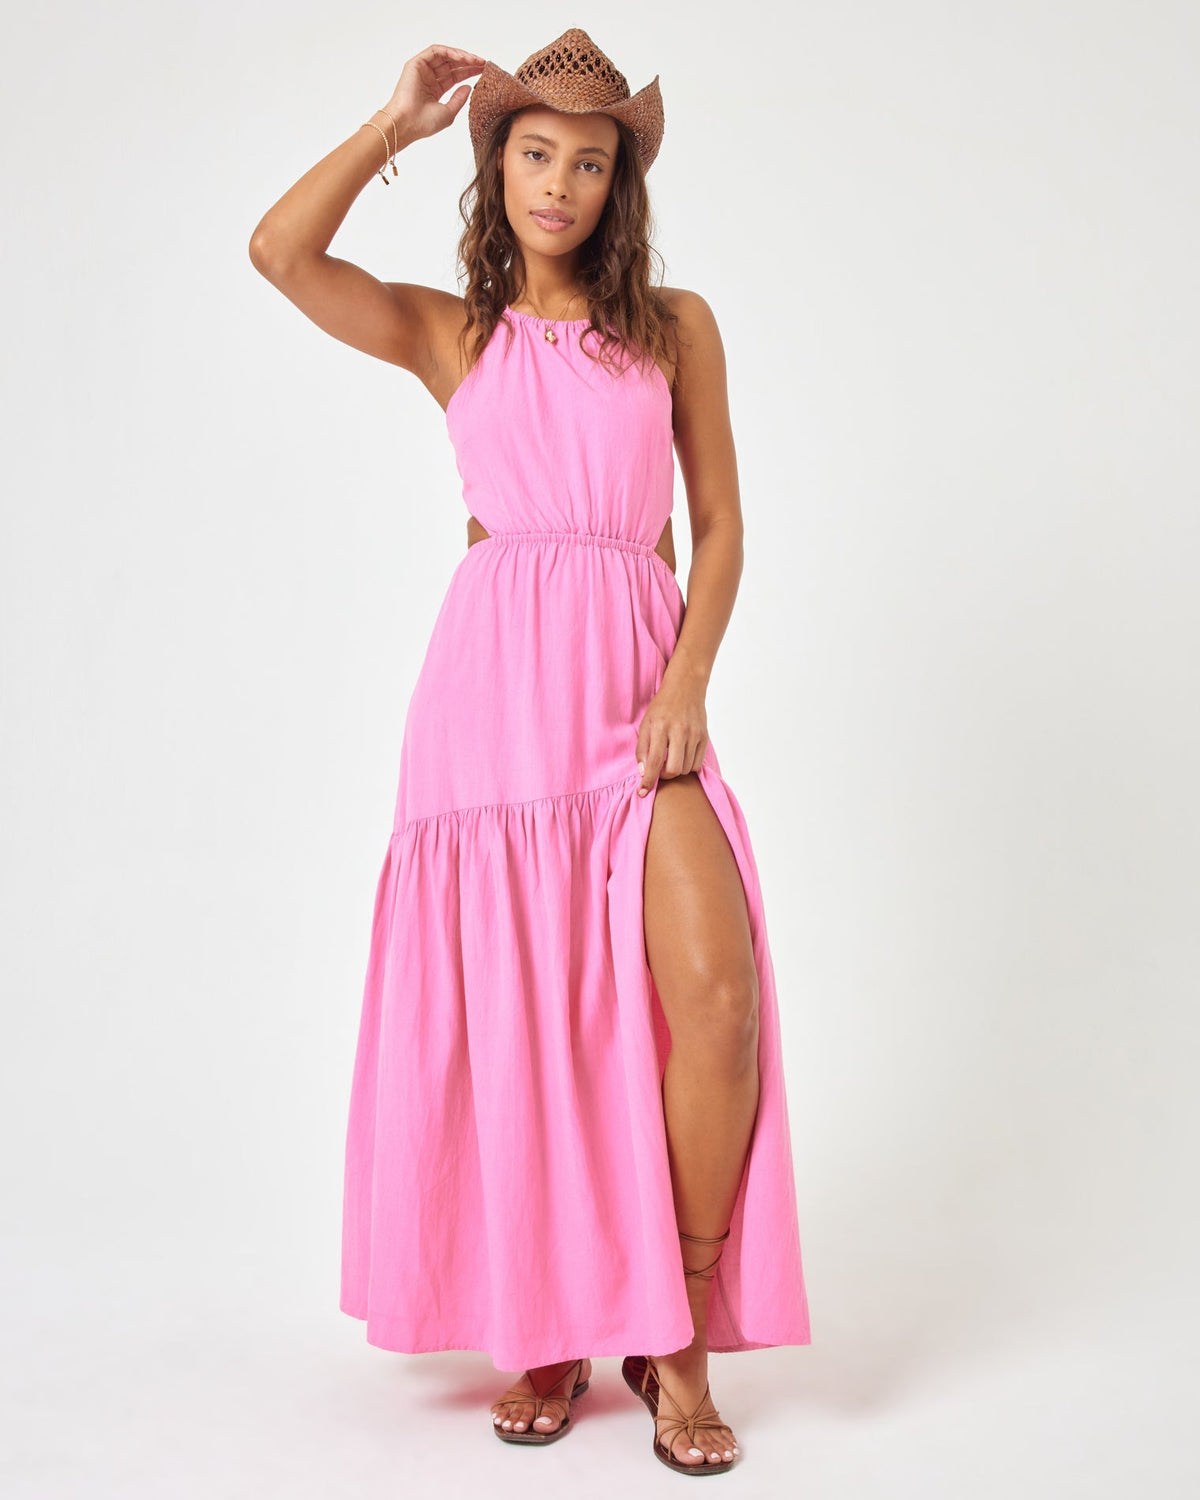 Jaide Dress - Guava Guava | Model: Natalie (size: S)